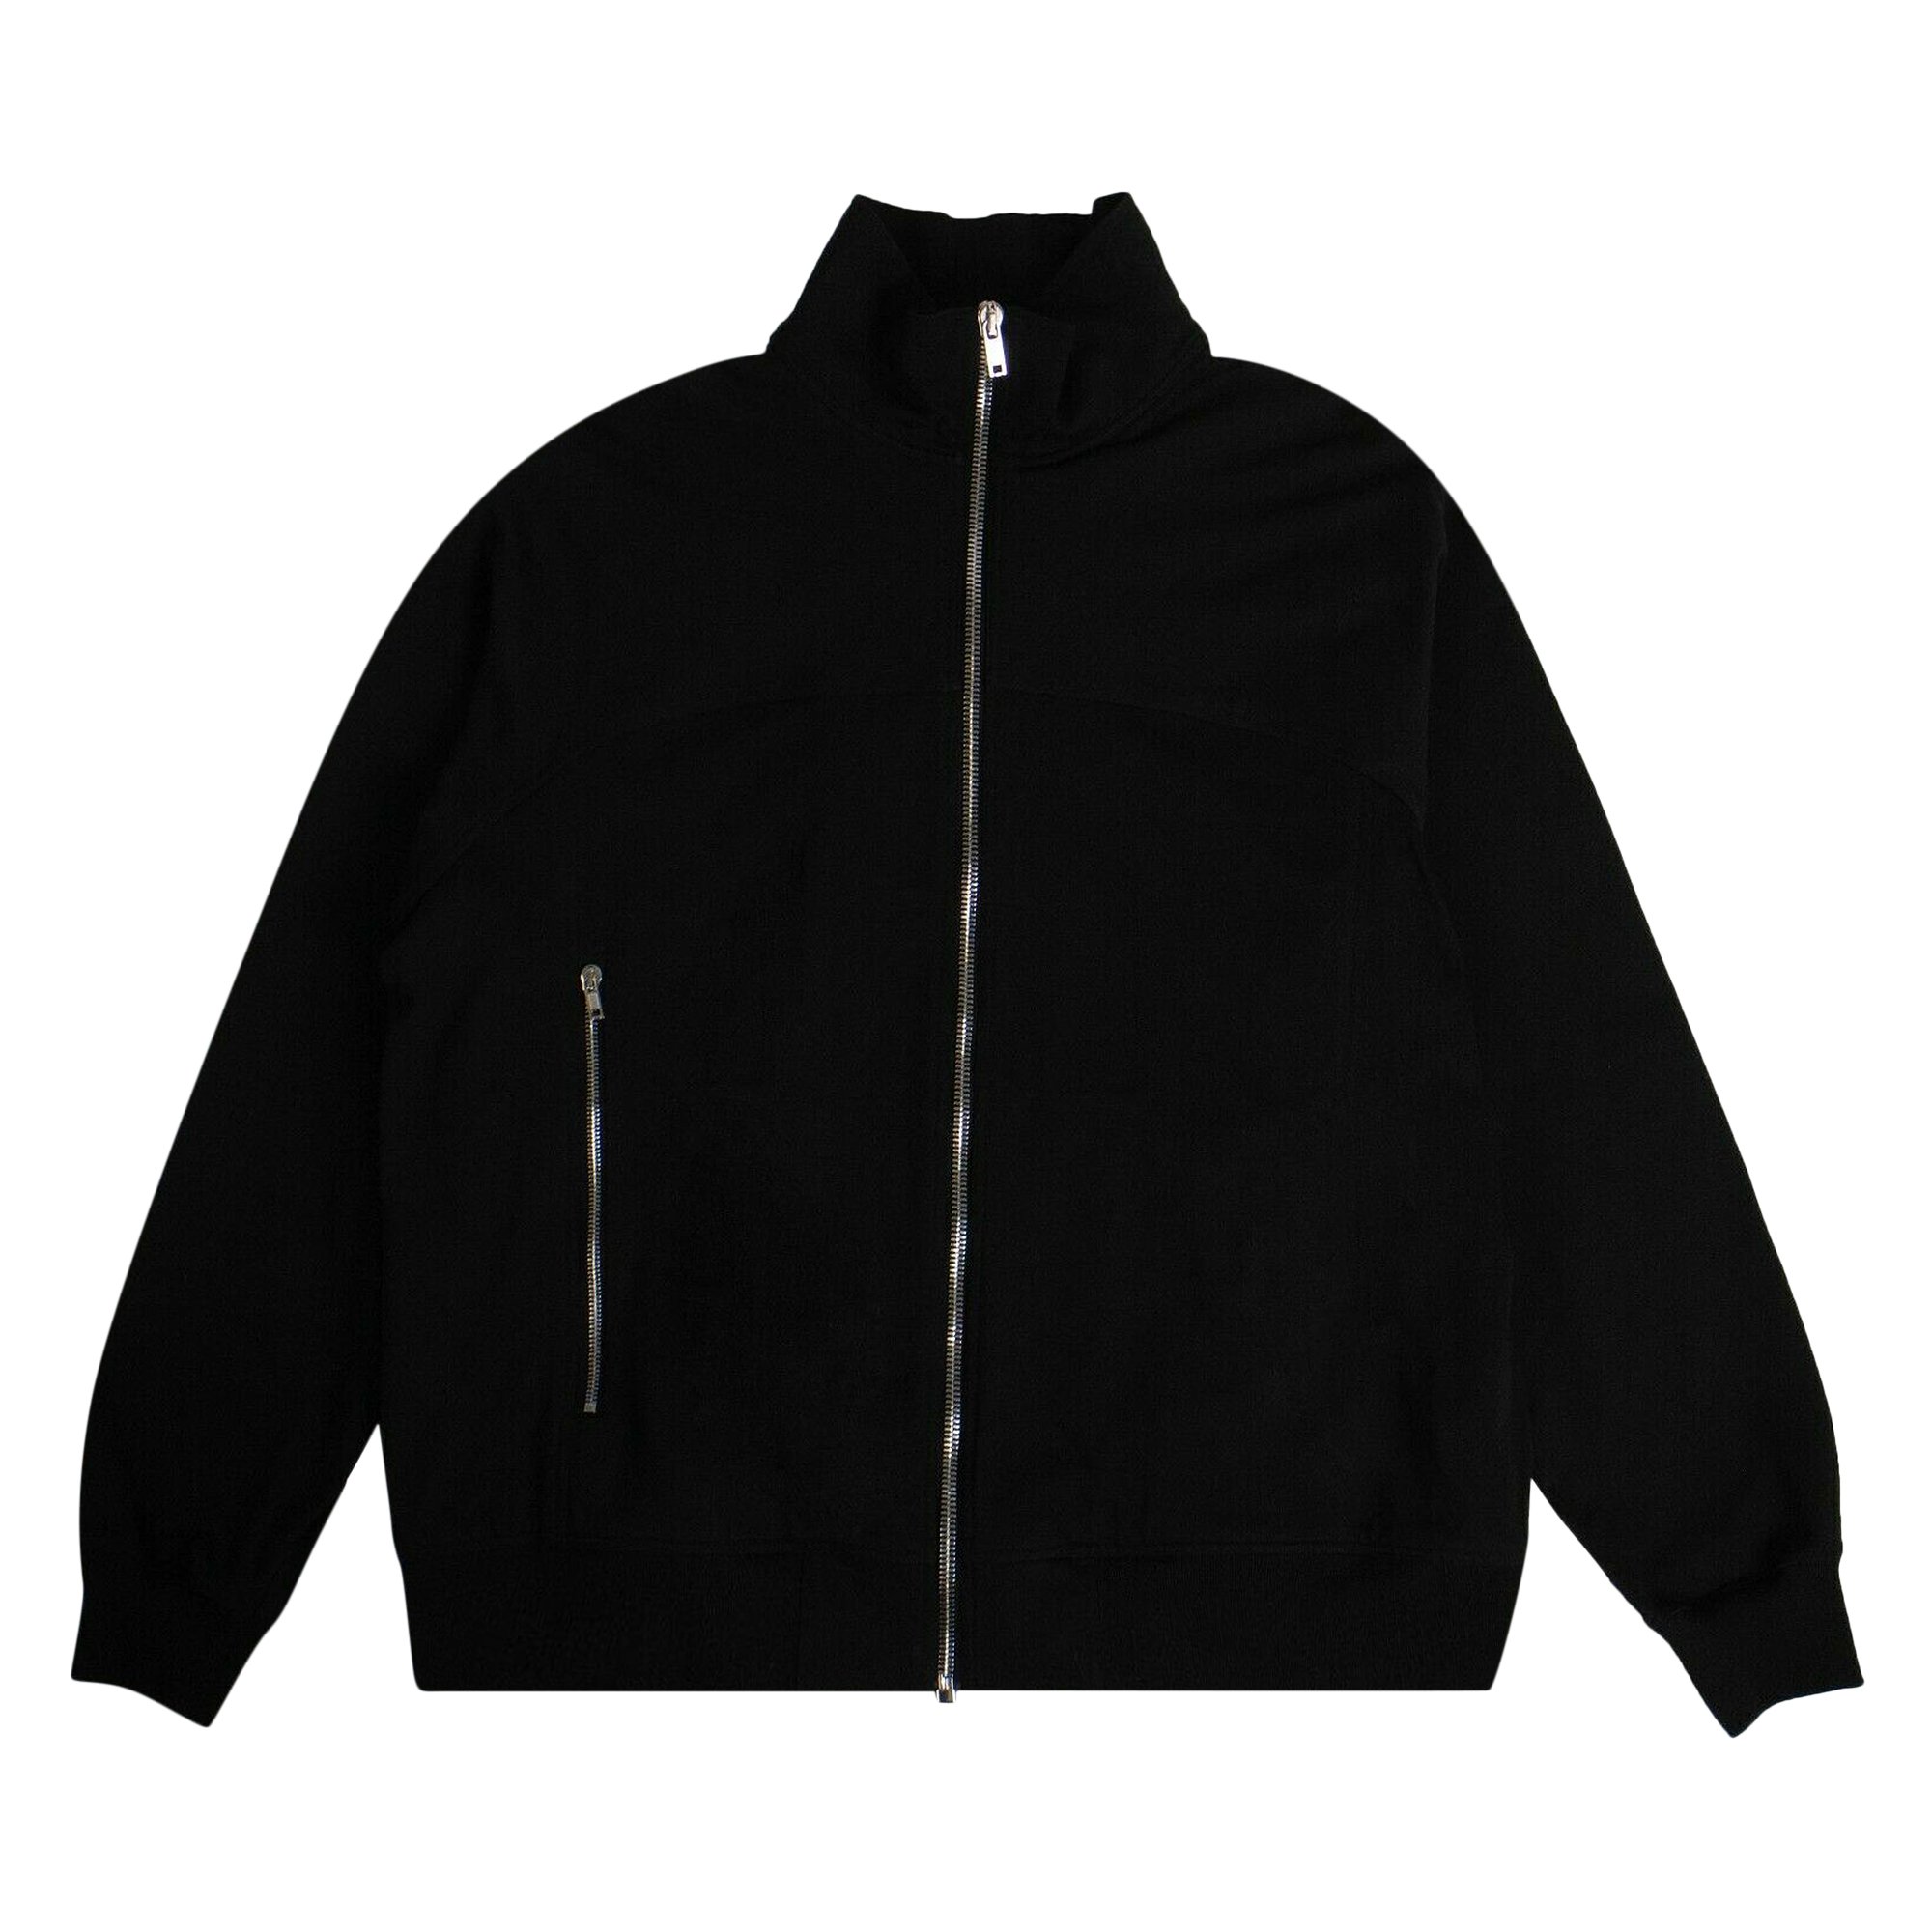 Buy Rick Owens Zip Front Track Jacket 'Black' - RU20S7289 BA 09 | GOAT